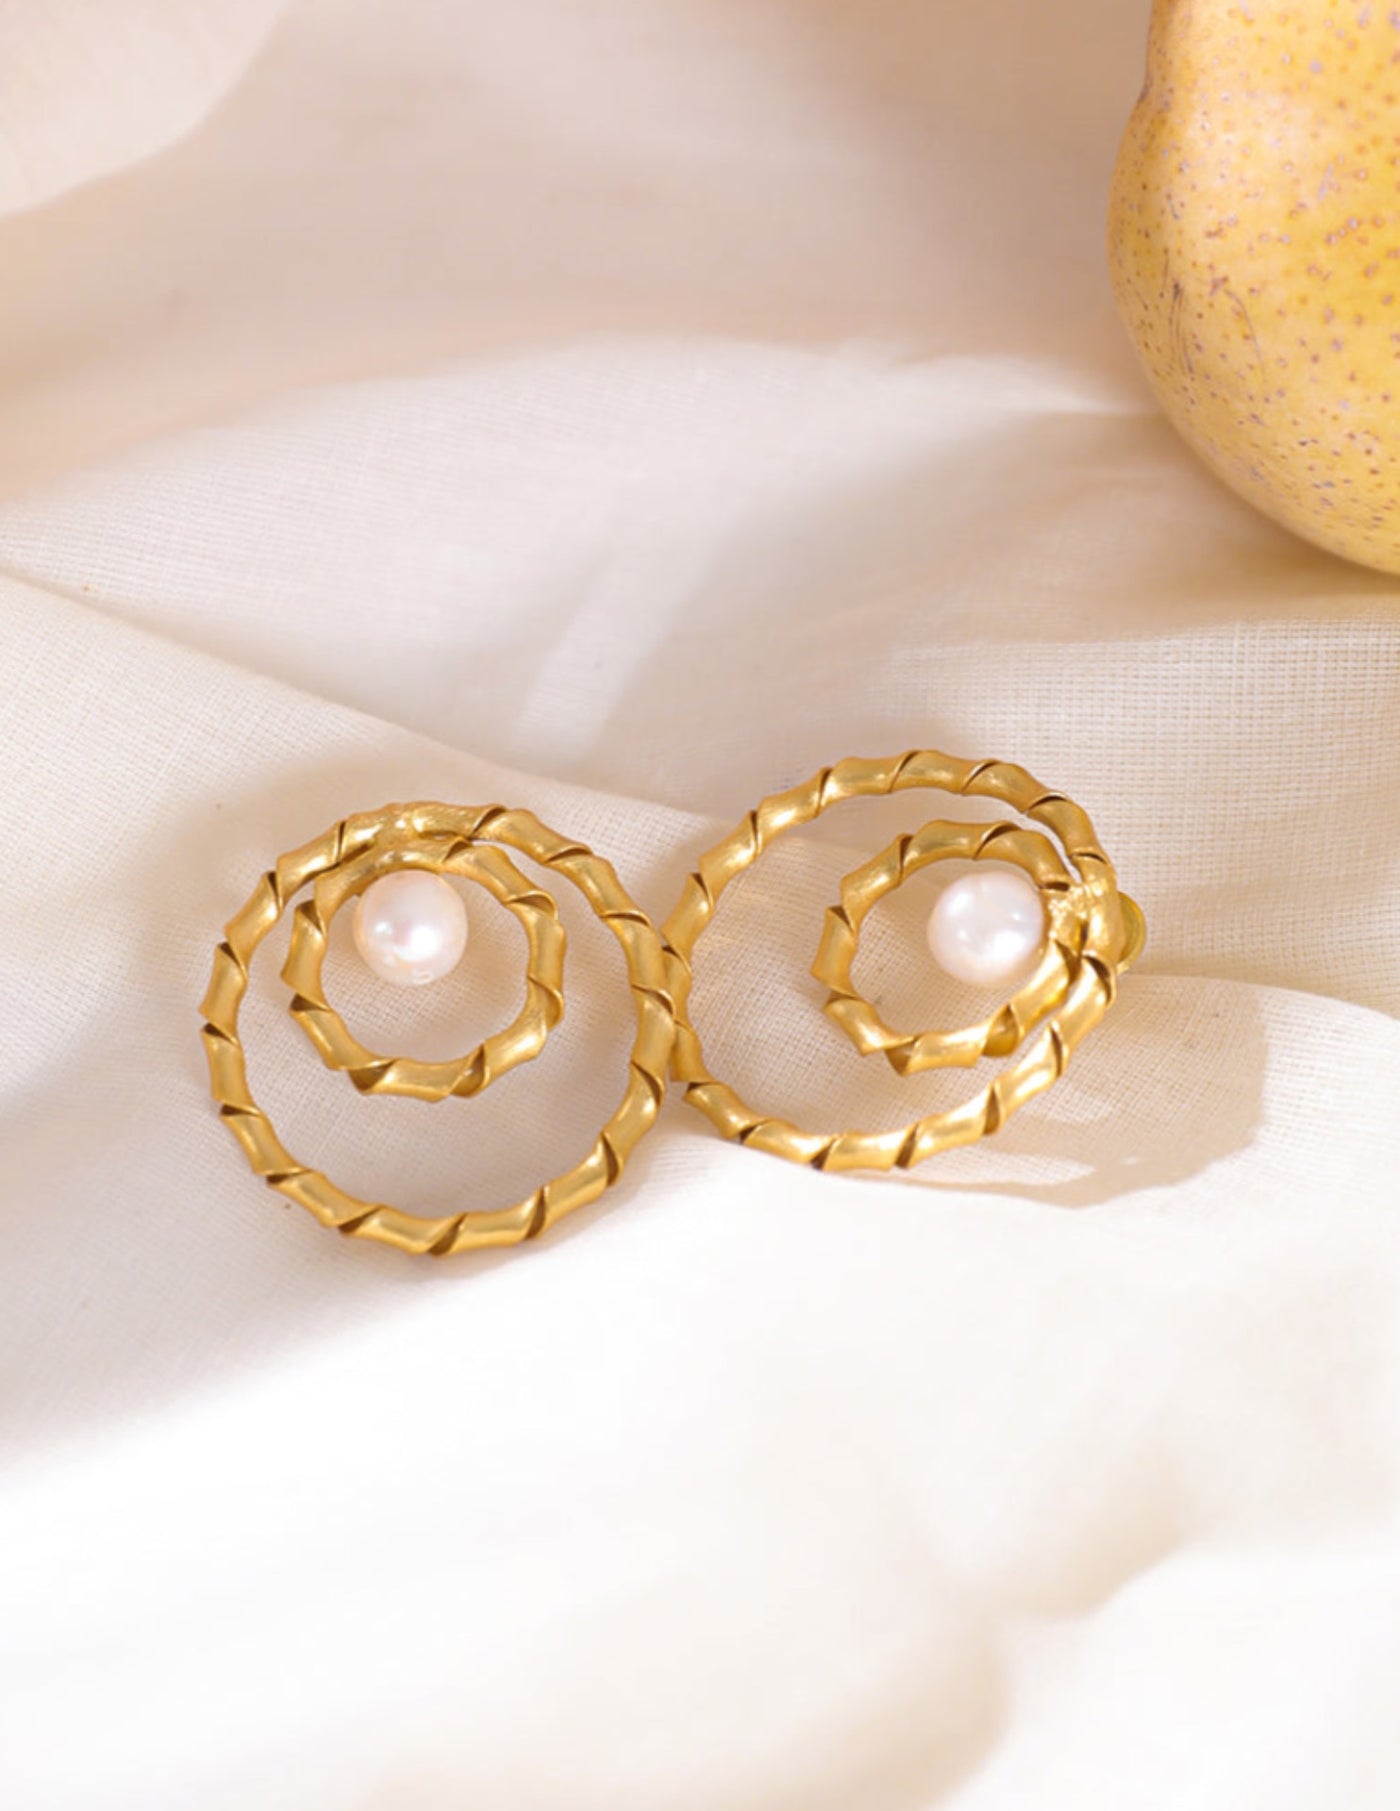 The Athena Earrings